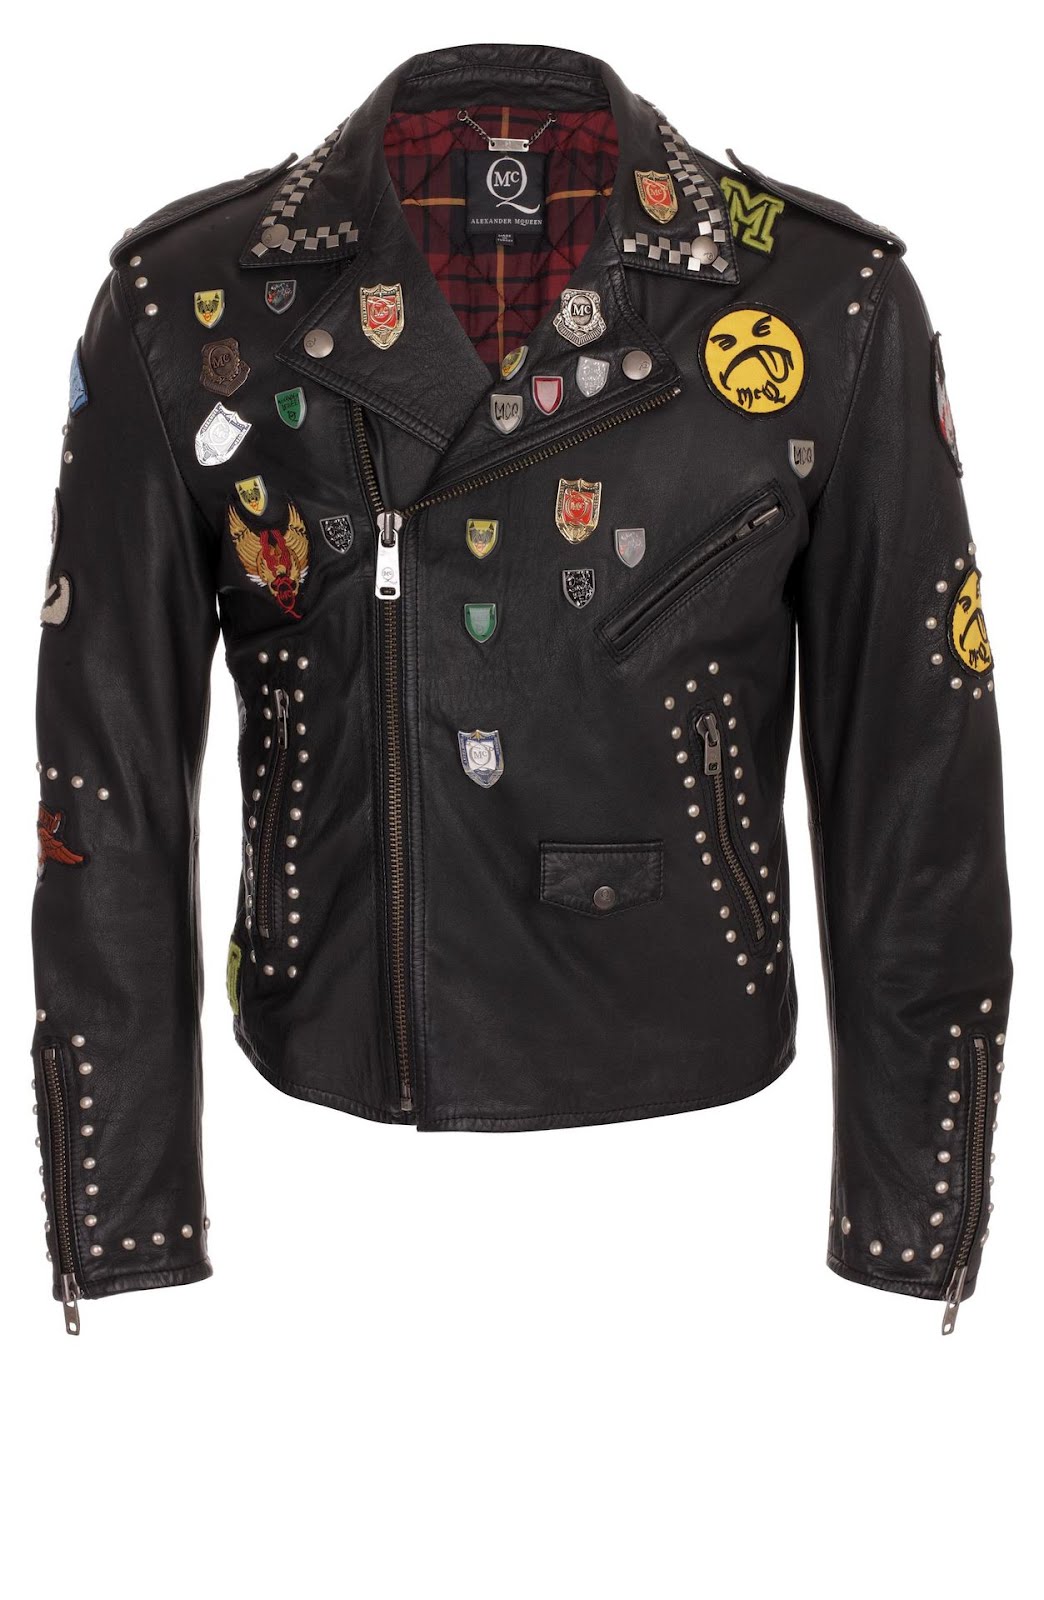 Mookie's World: McQ Leather Punk Biker Jacket